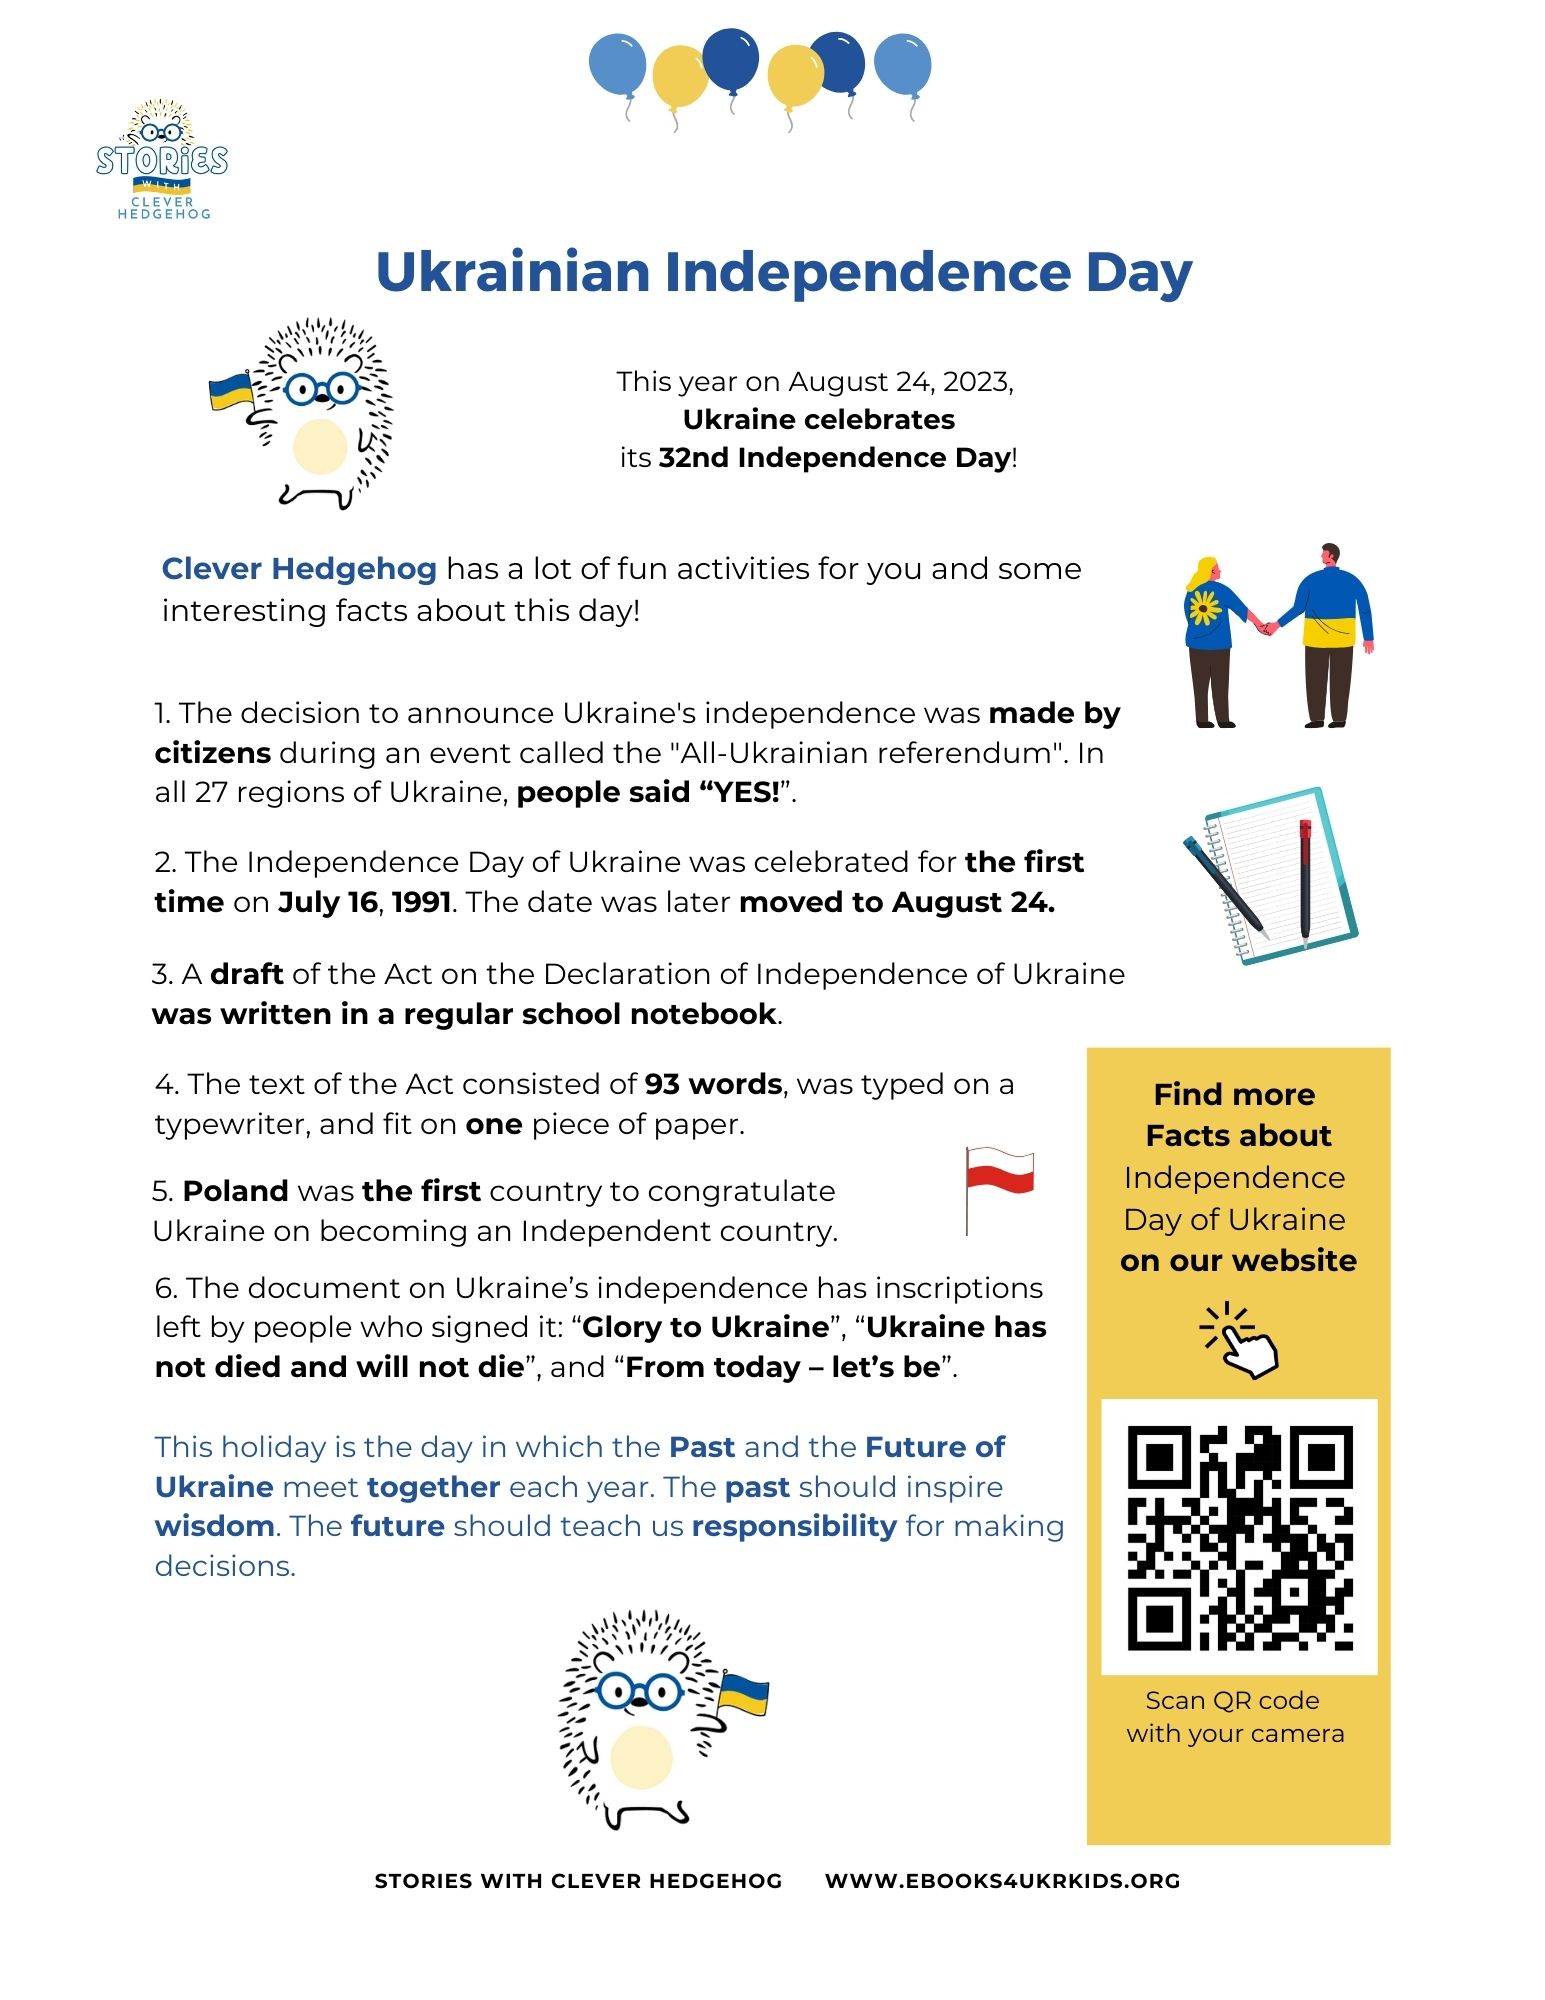 Ukraine Independence day free kids printables activities for children